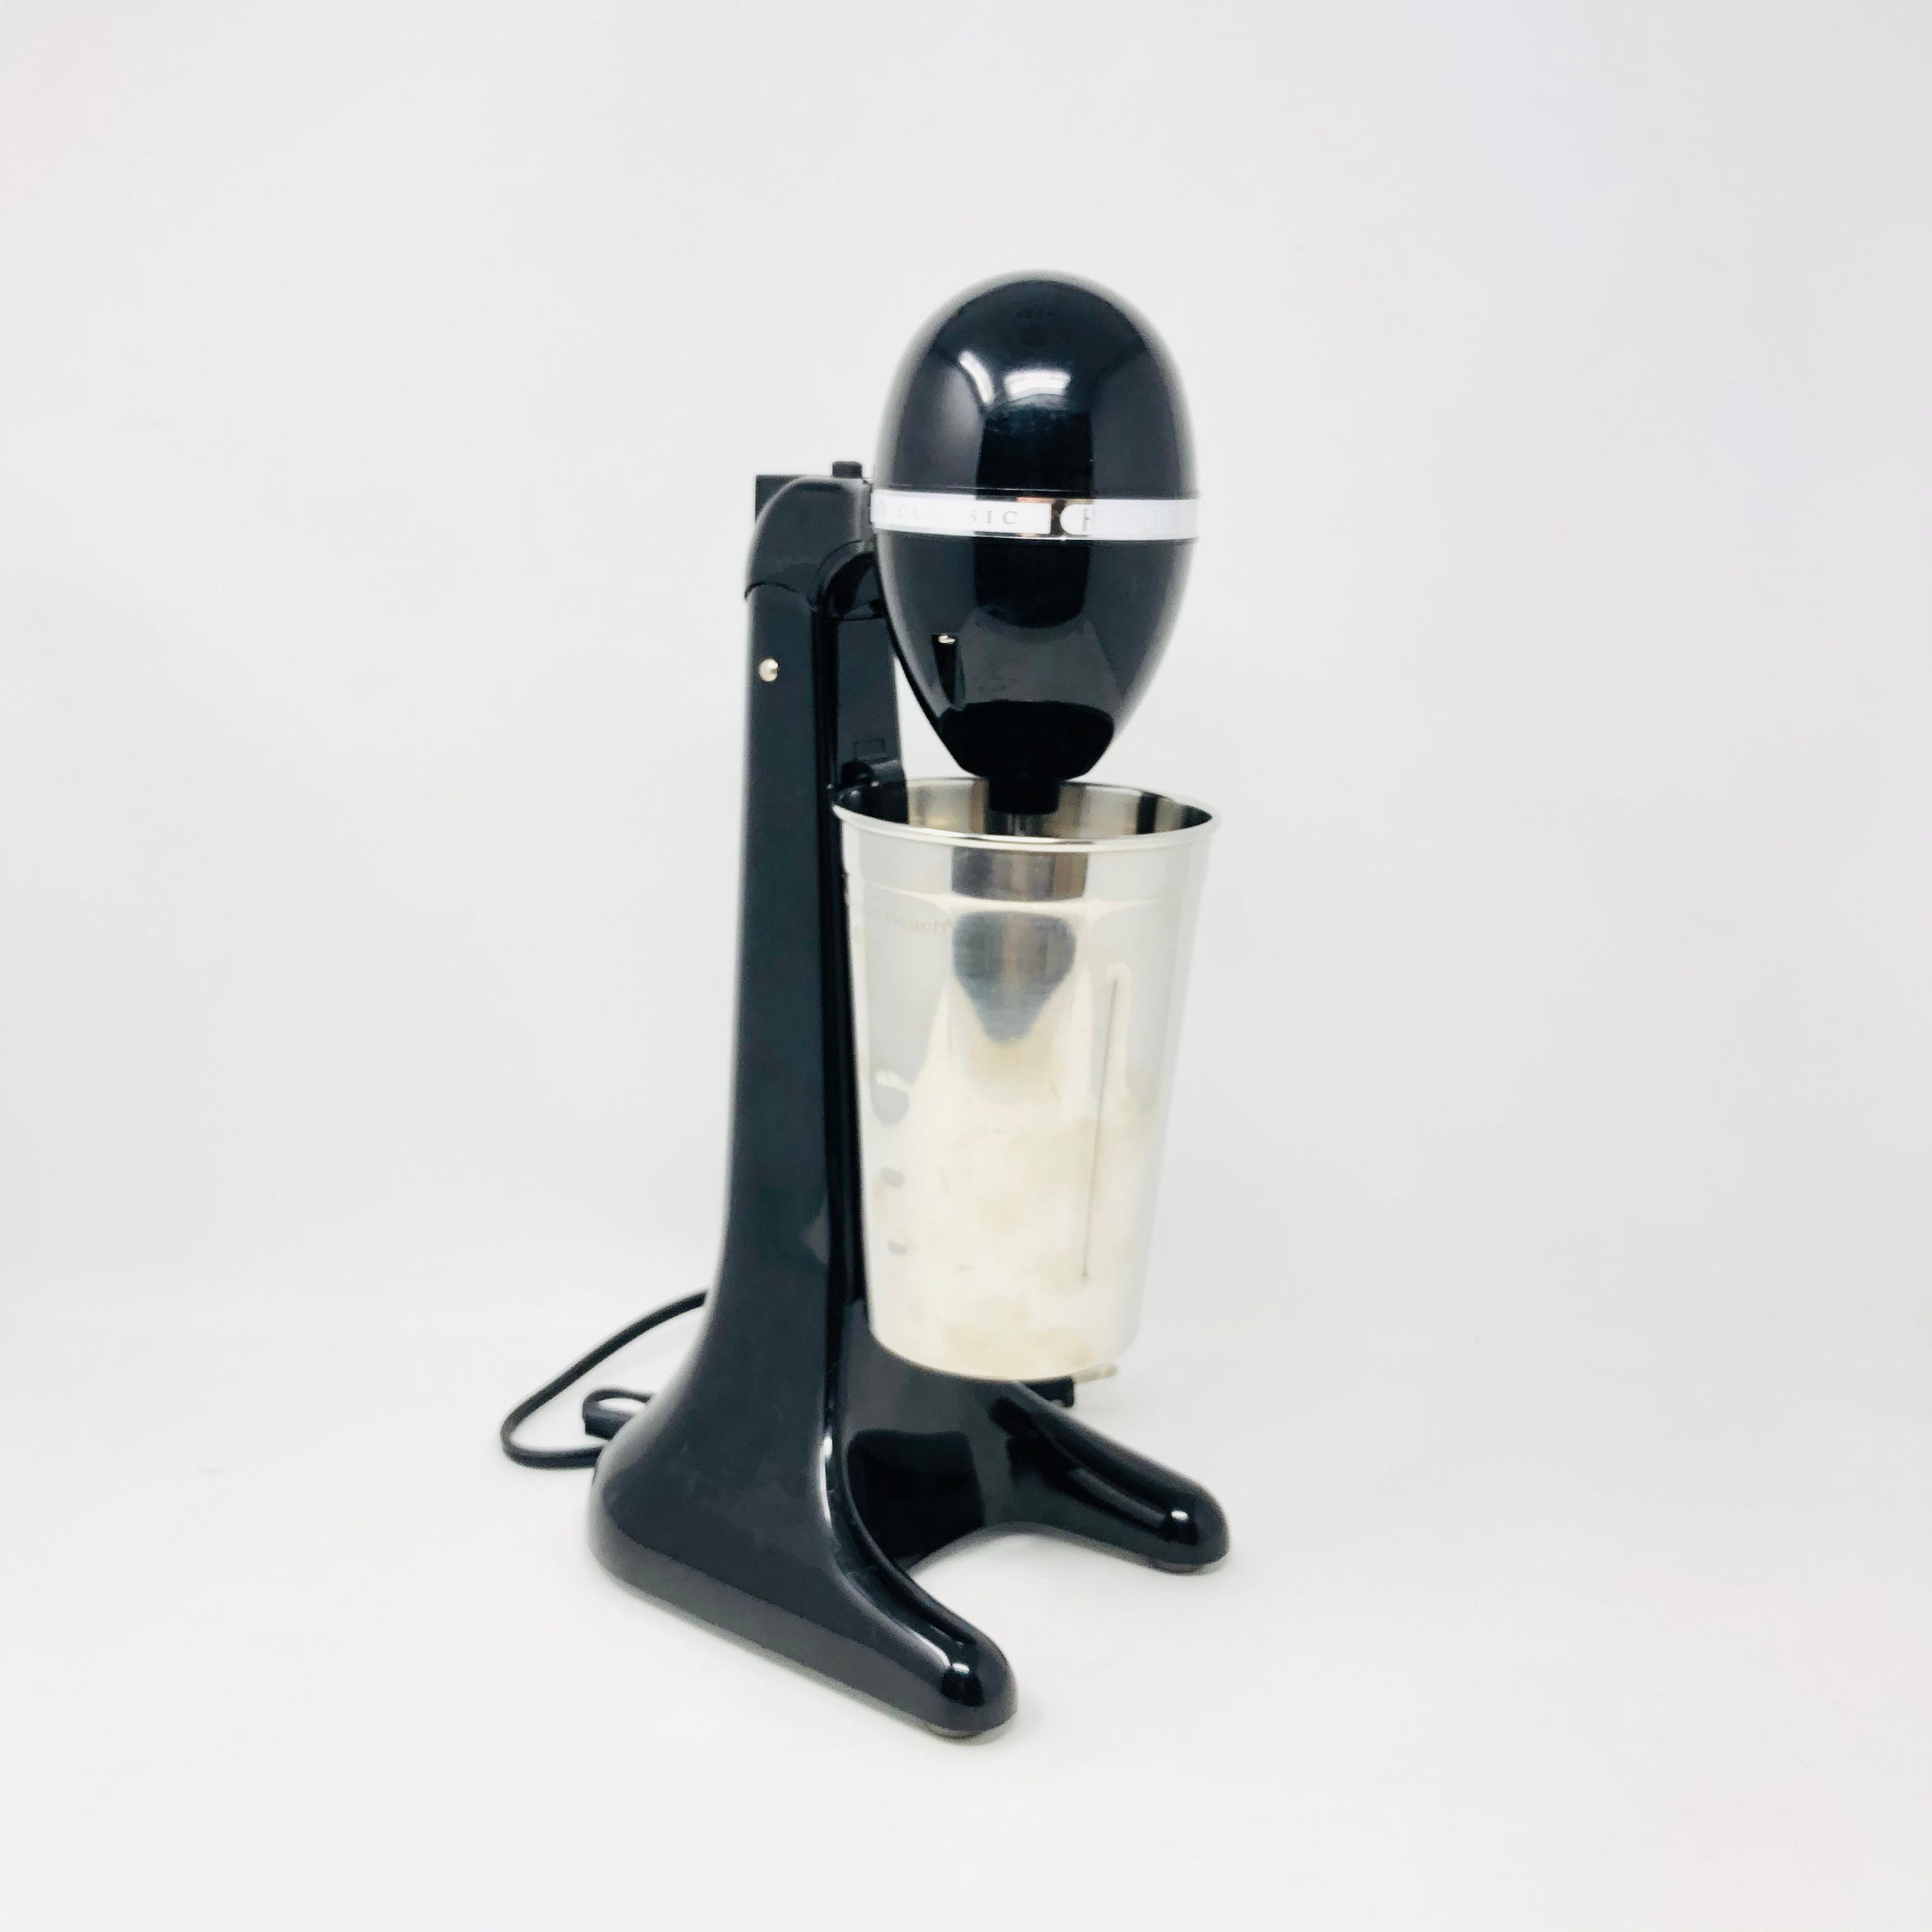 Hamilton Beach Classic Drink Master Milkshake Drink Mixer Model